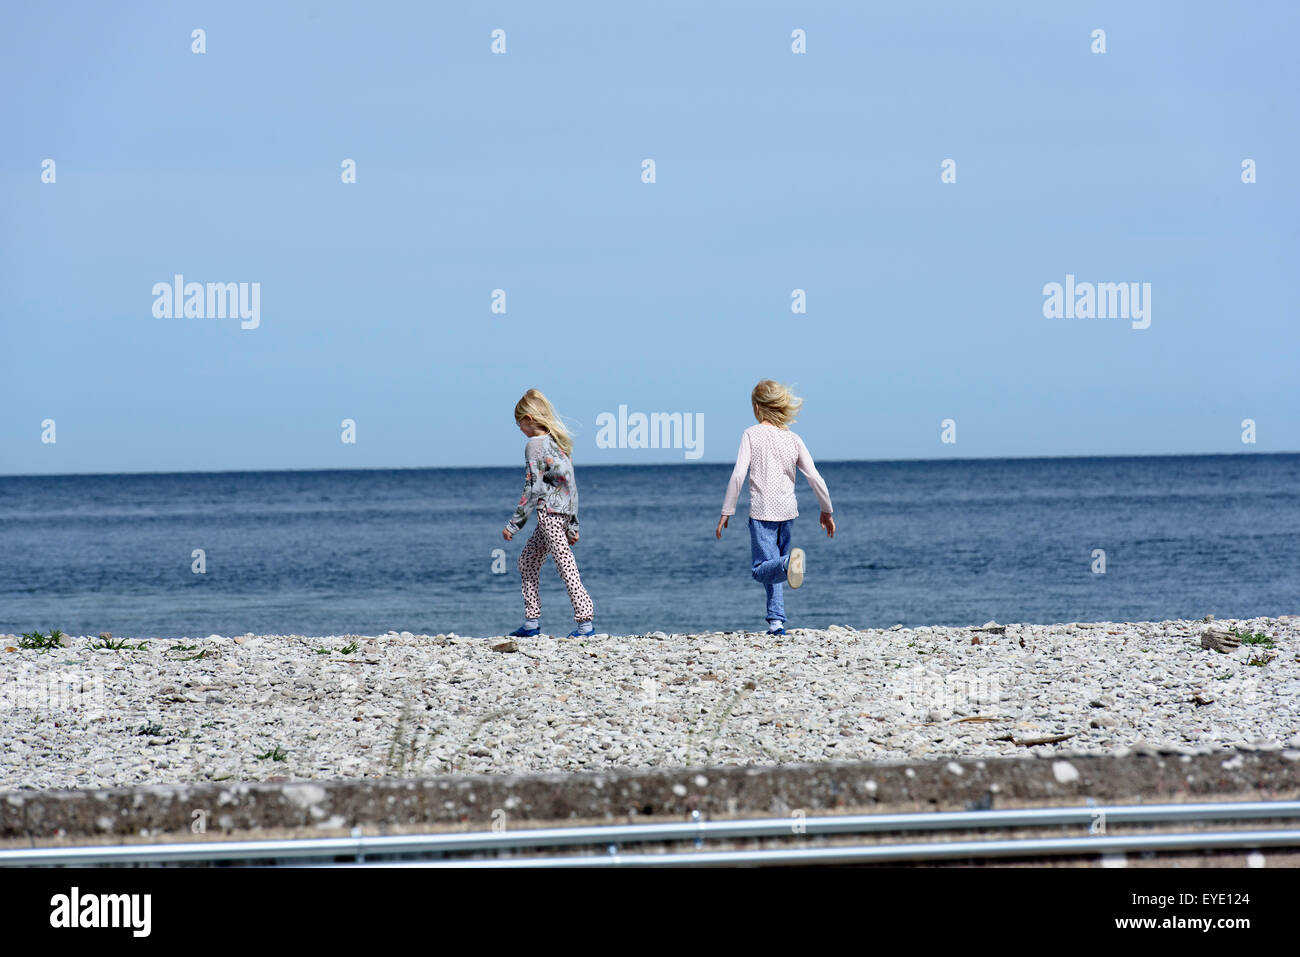 children at Port of Lickershamn, Isle of Gotland, Sweden Stock Photo